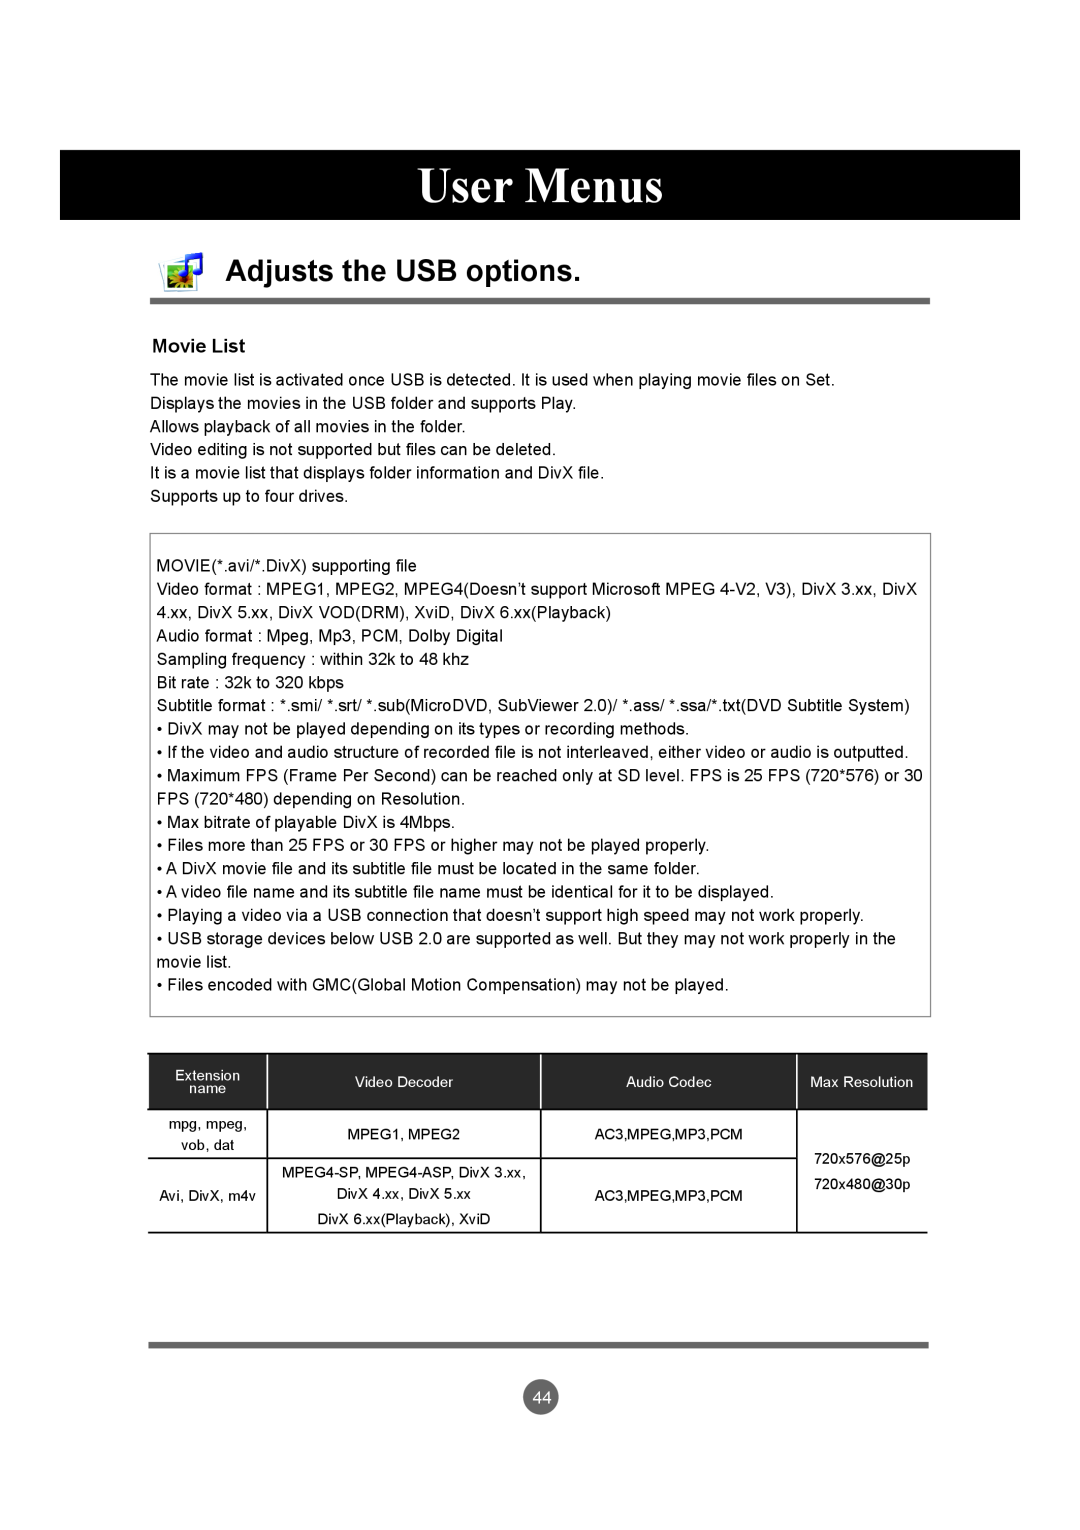 LG Electronics M4720C, M5520C owner manual User Menus, Adjusts the USB options, Movie List 